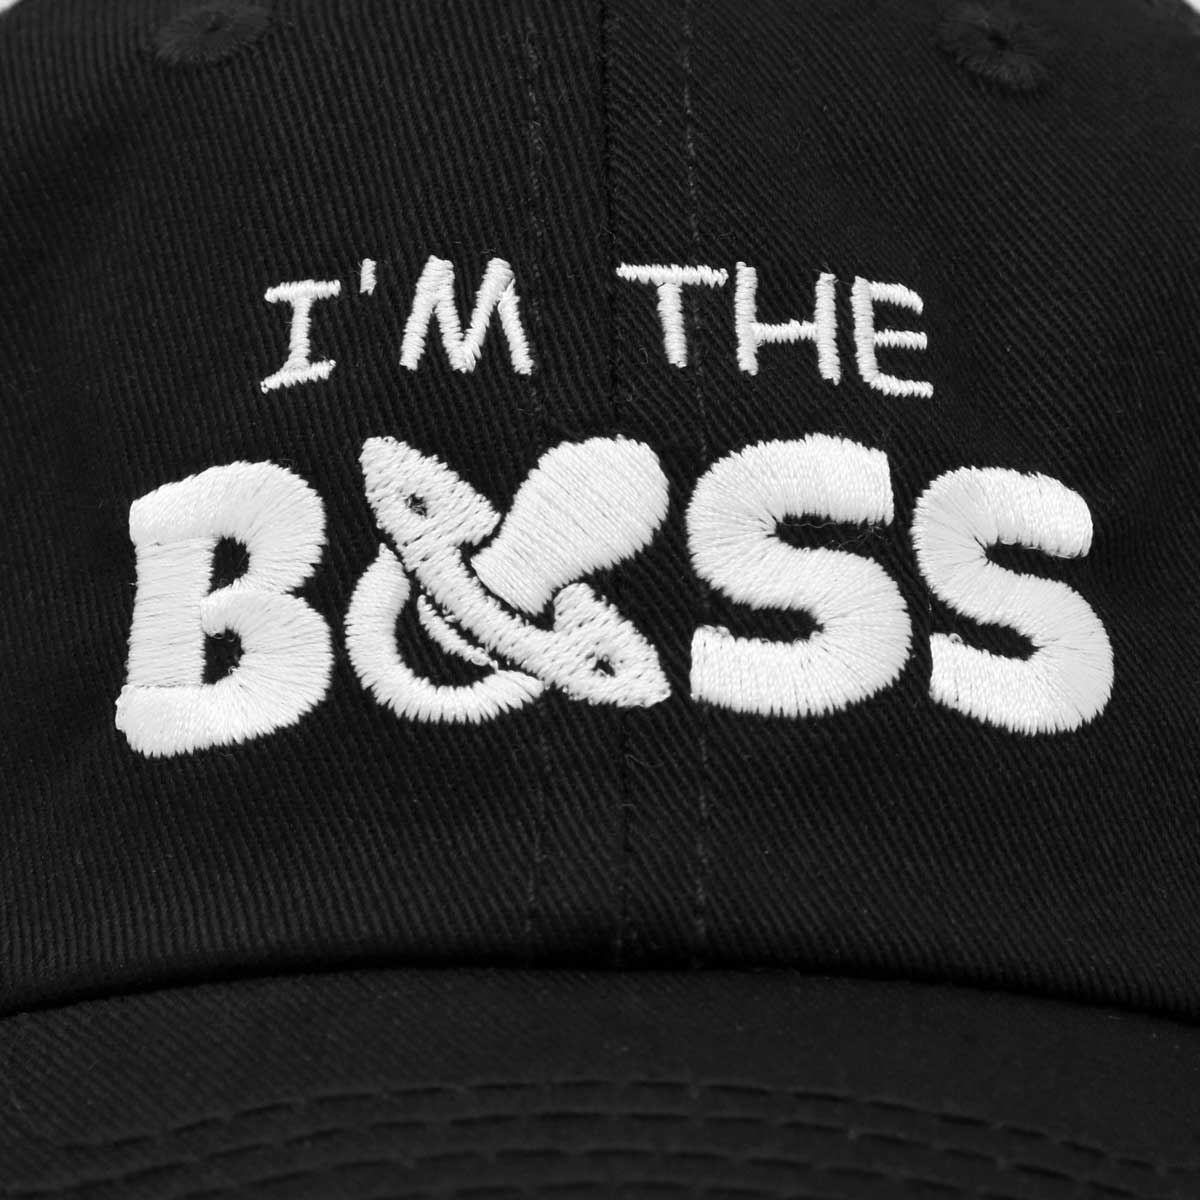 baby boss cap